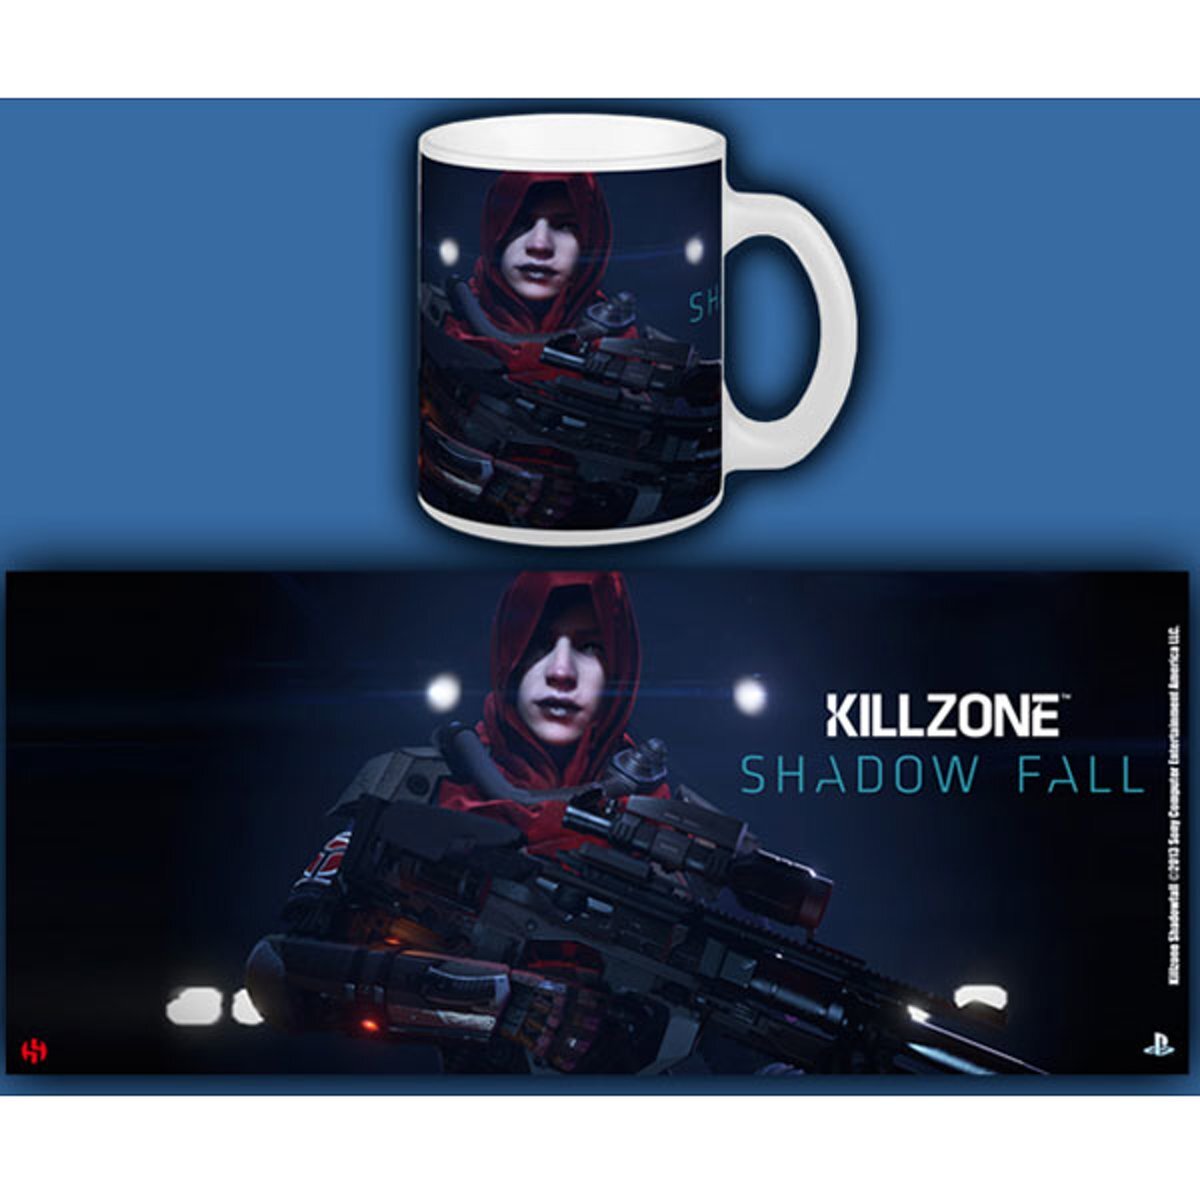 Killzone SHADOW FALL - Mug Echo 02